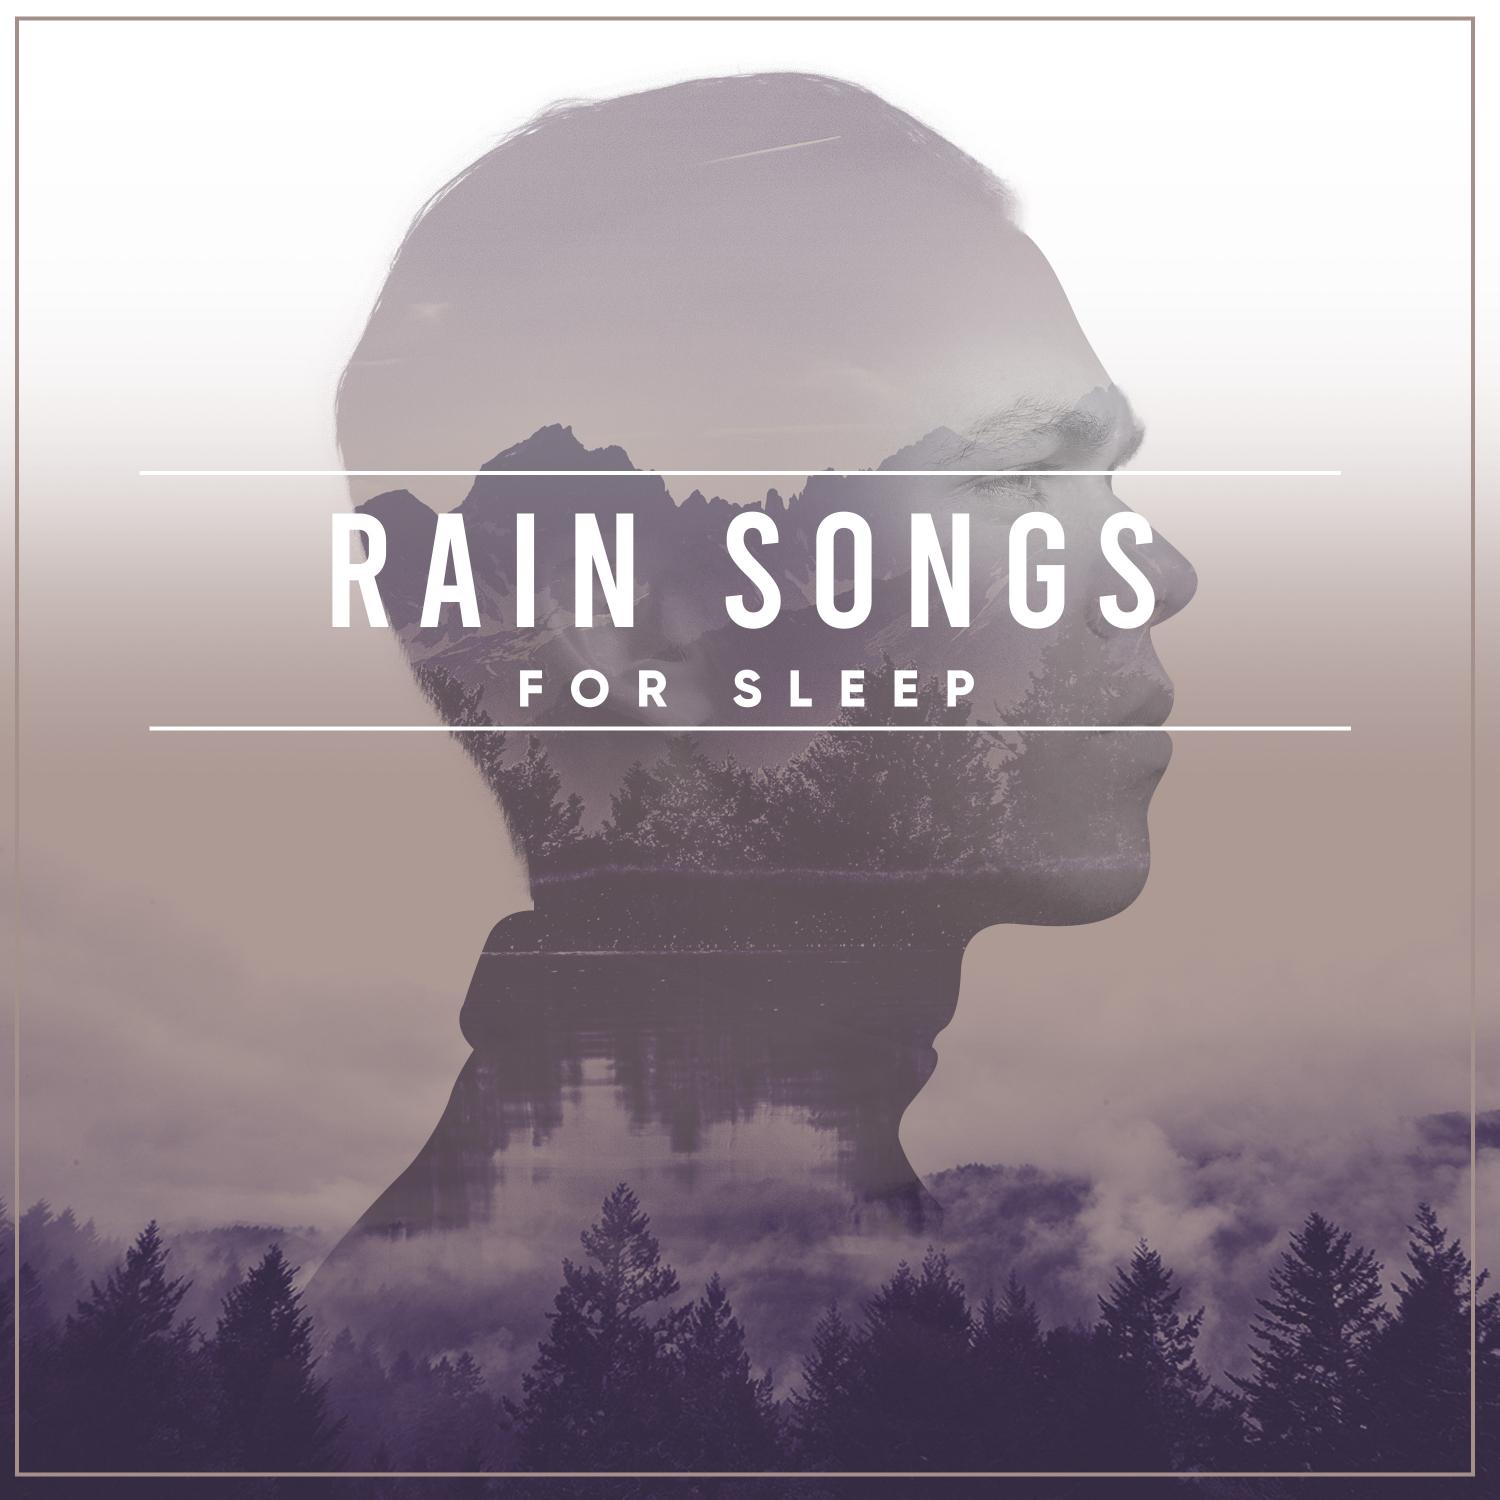 14 Mindfulness Rain Songs for Sleeping